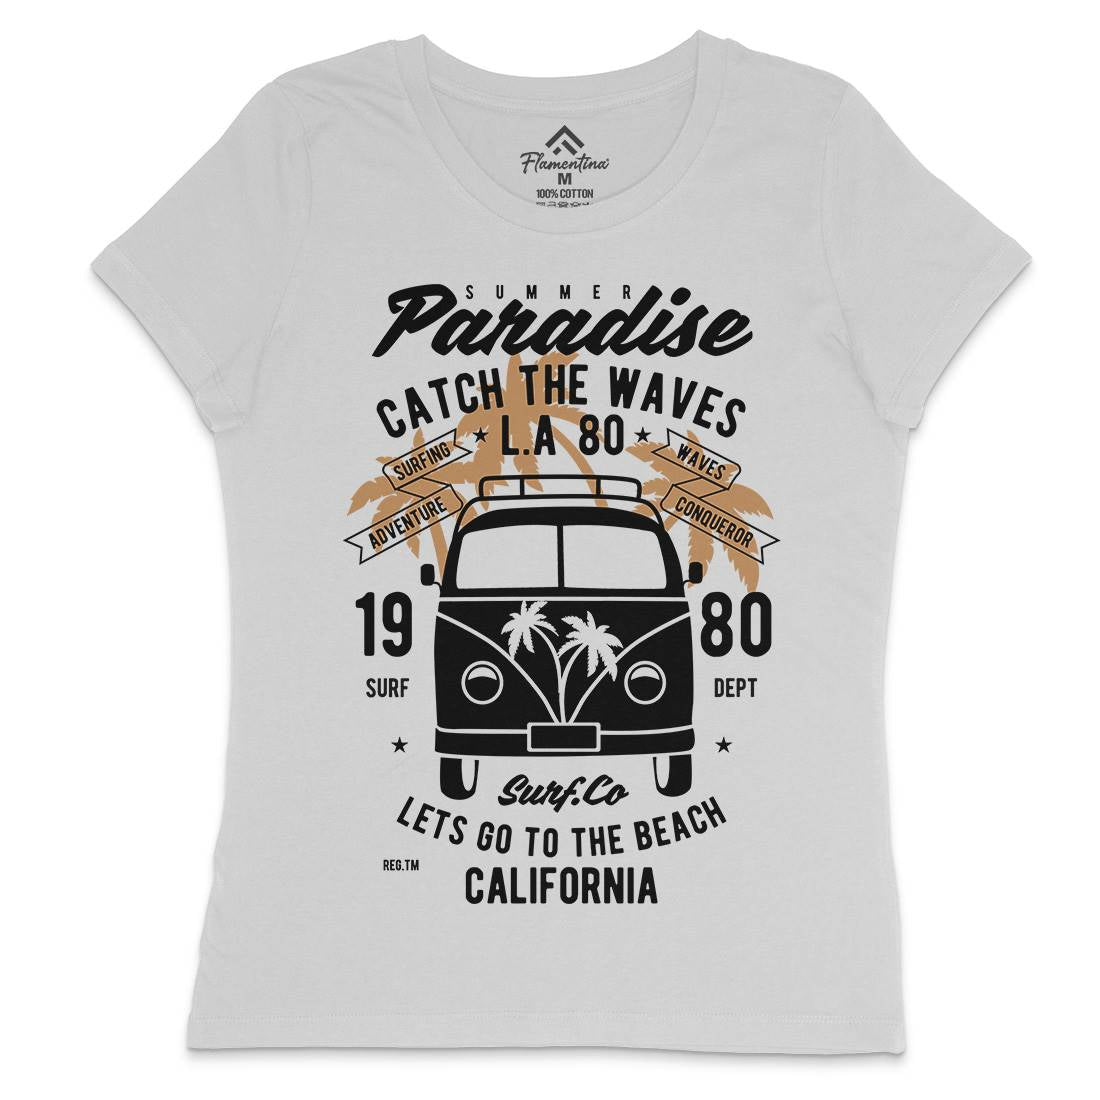 Catch The Waves Surfing Van Womens Crew Neck T-Shirt Surf B393